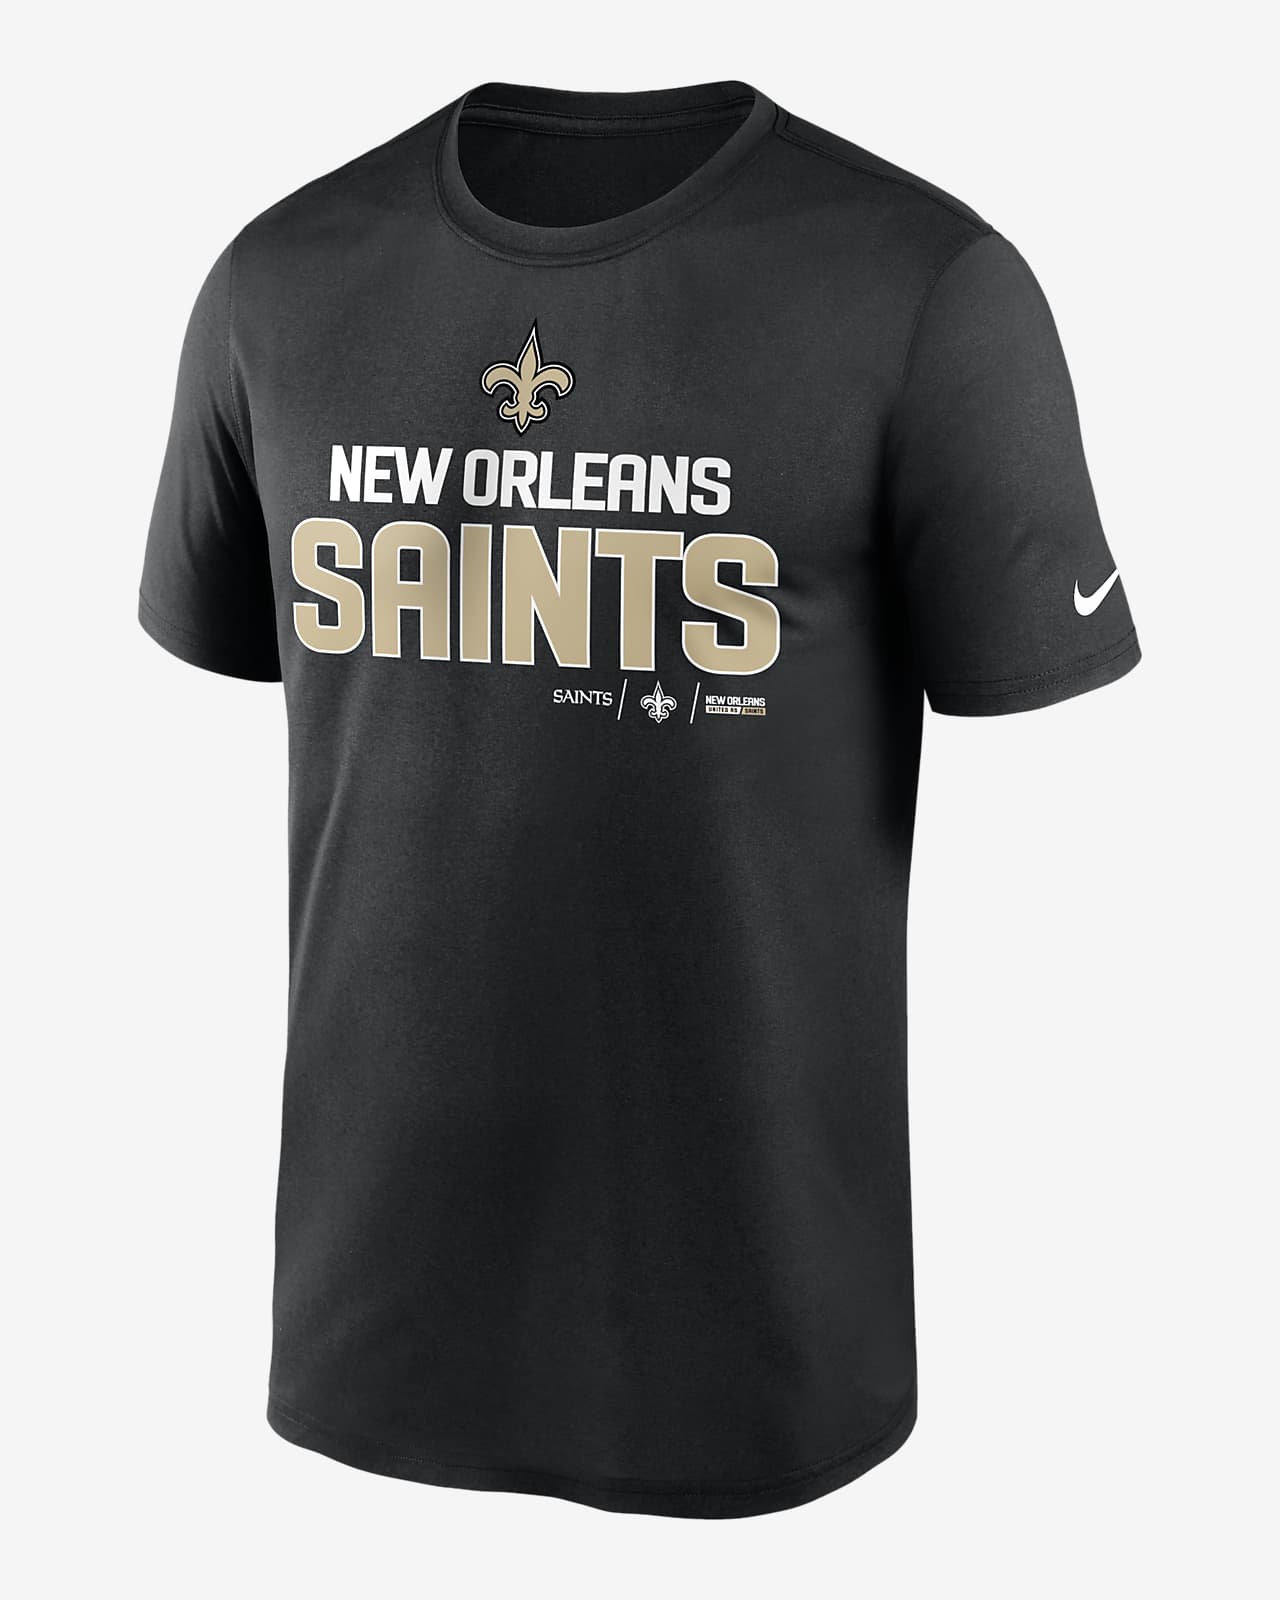 saints new shirt